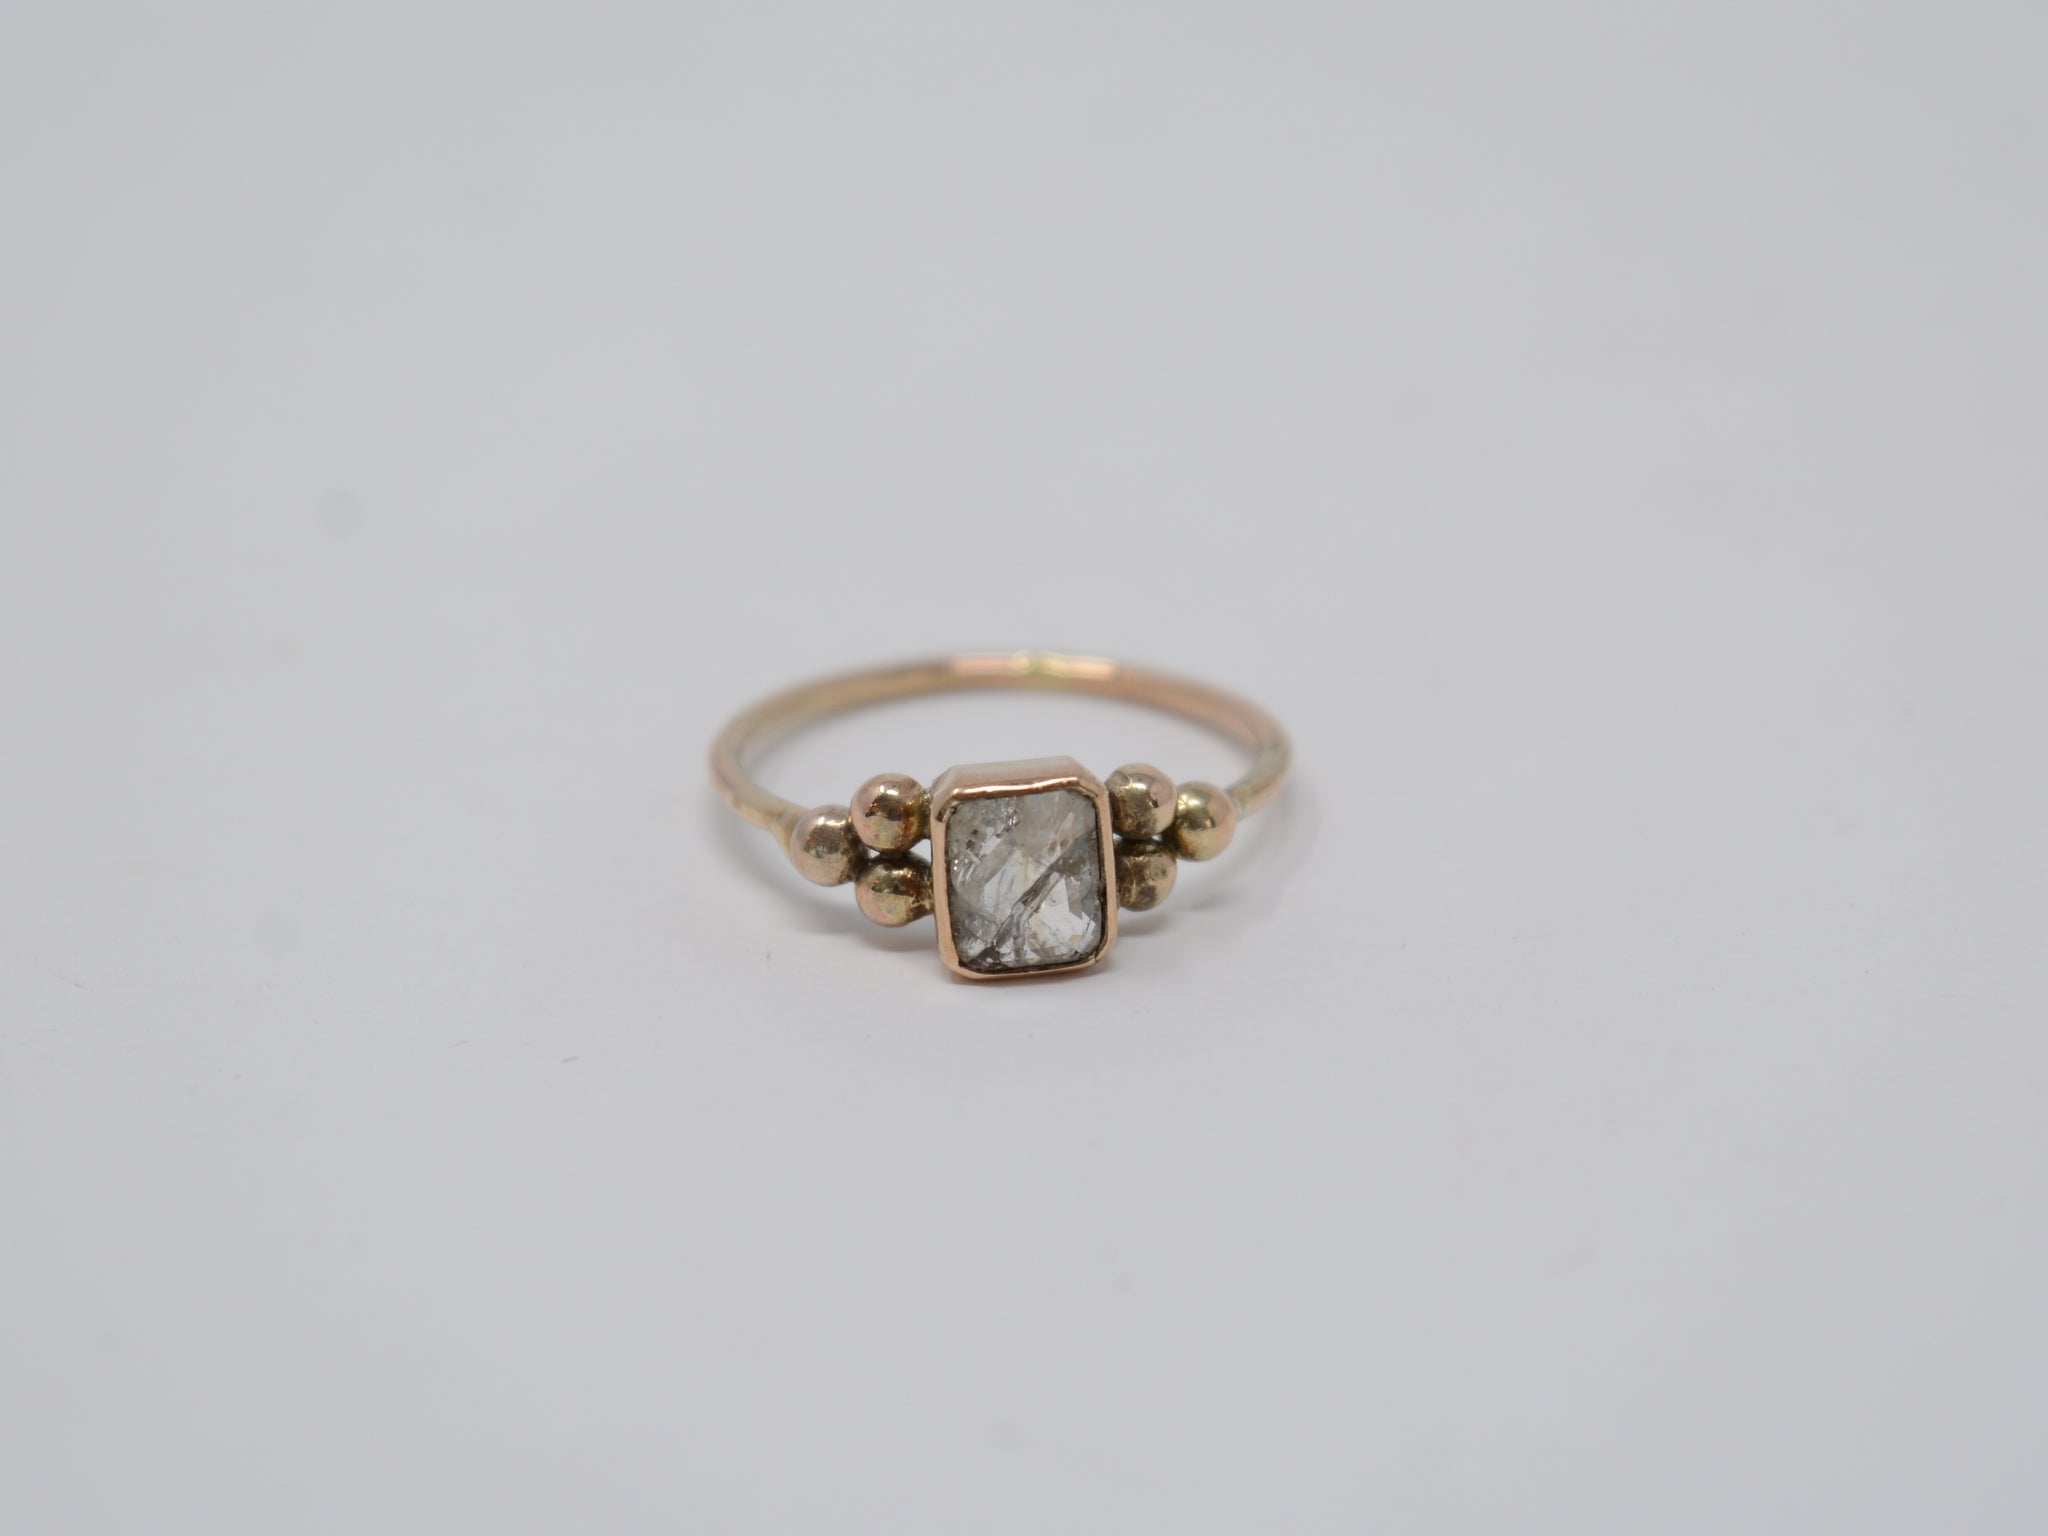 Vintage Square Diamond Ring